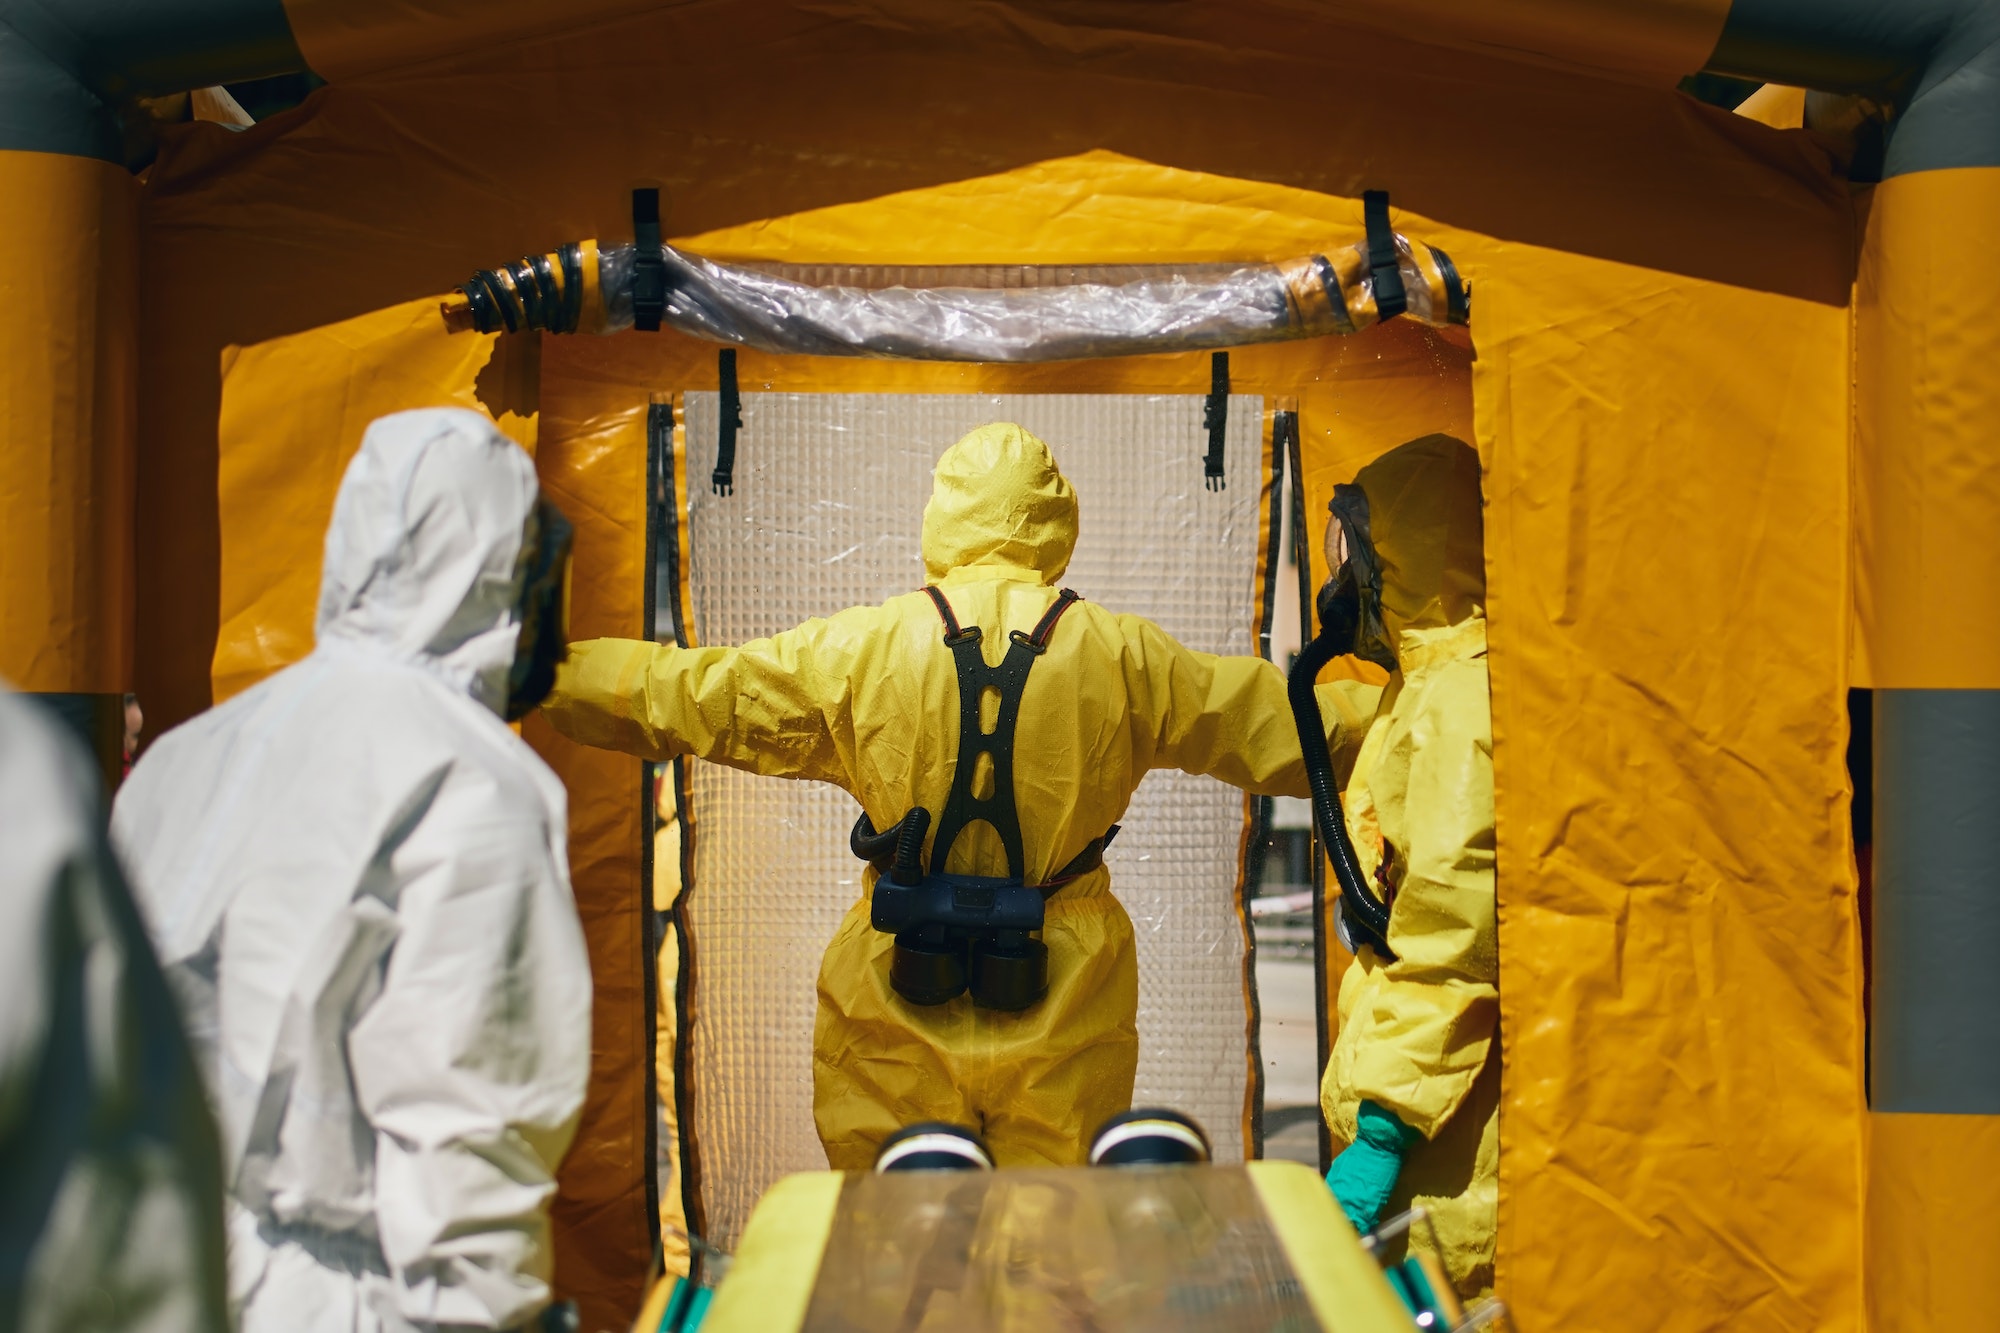 Members of biohazard teams in protective suits